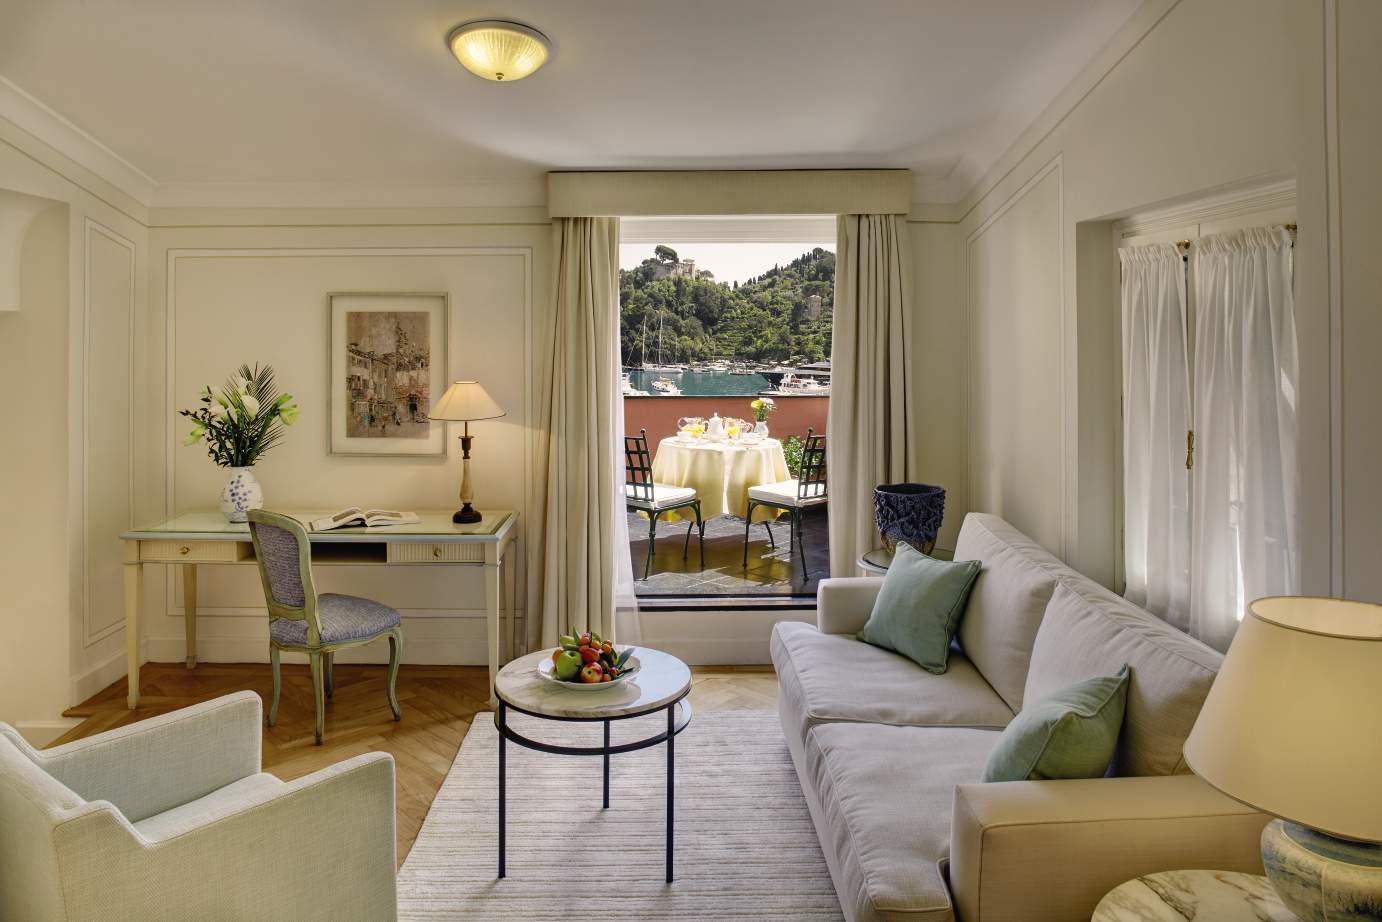 Belmond's Hotel Splendido & Splendido Mare, Portofino - Mulberry